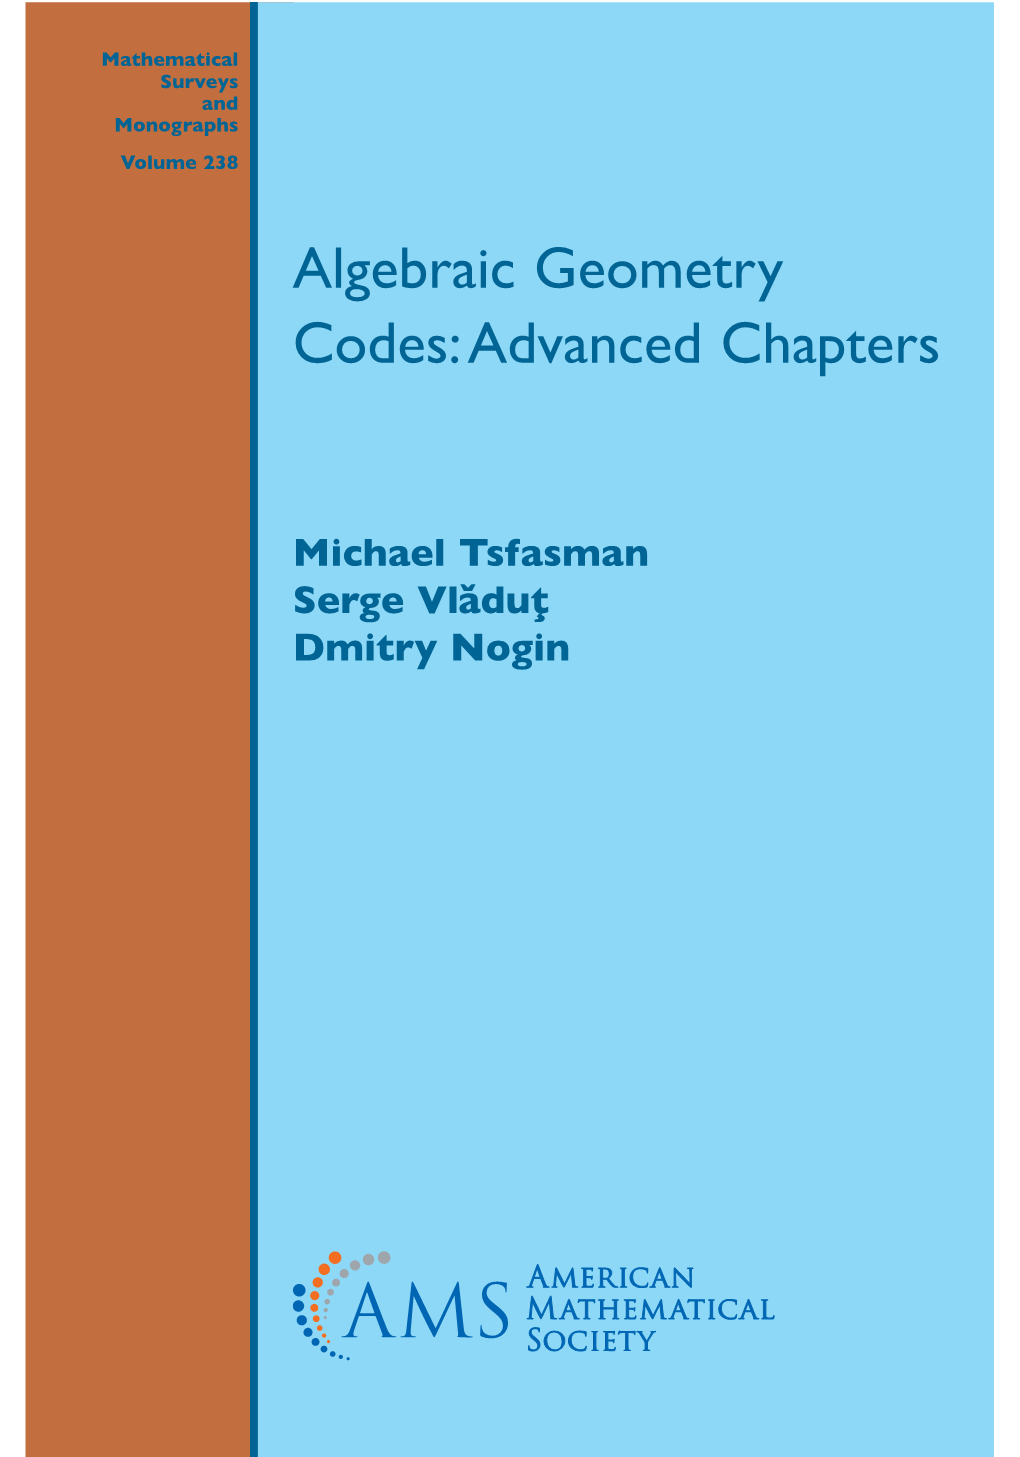 Algebraic Geometry Codes: Advanced Chapters